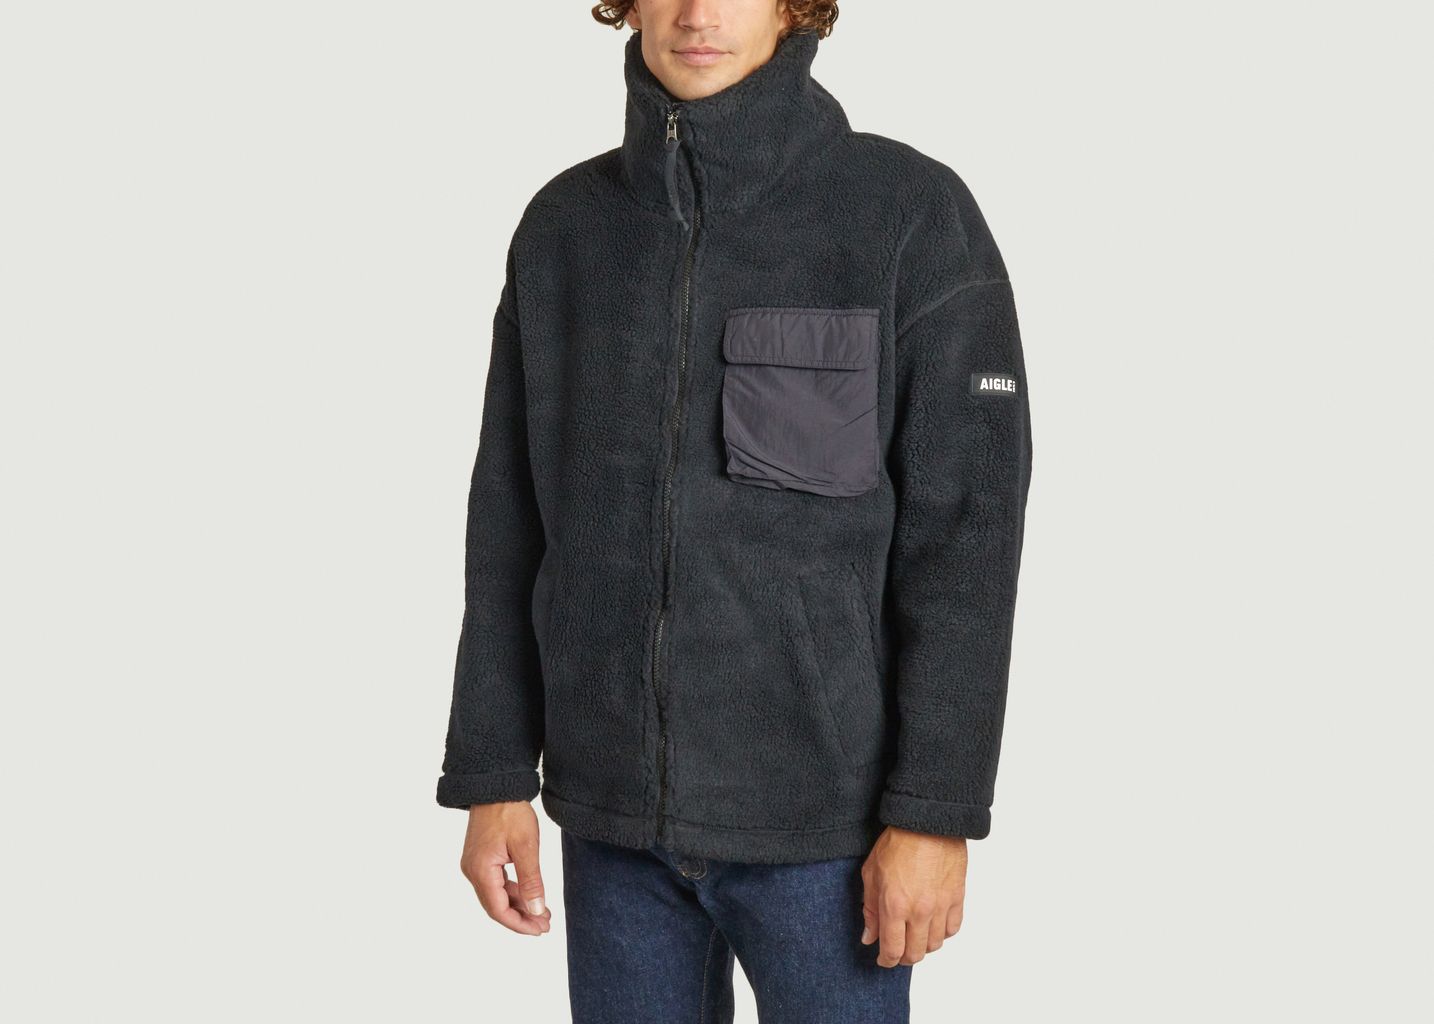 Sherpa Zip Fleece With Pocket - Aigle